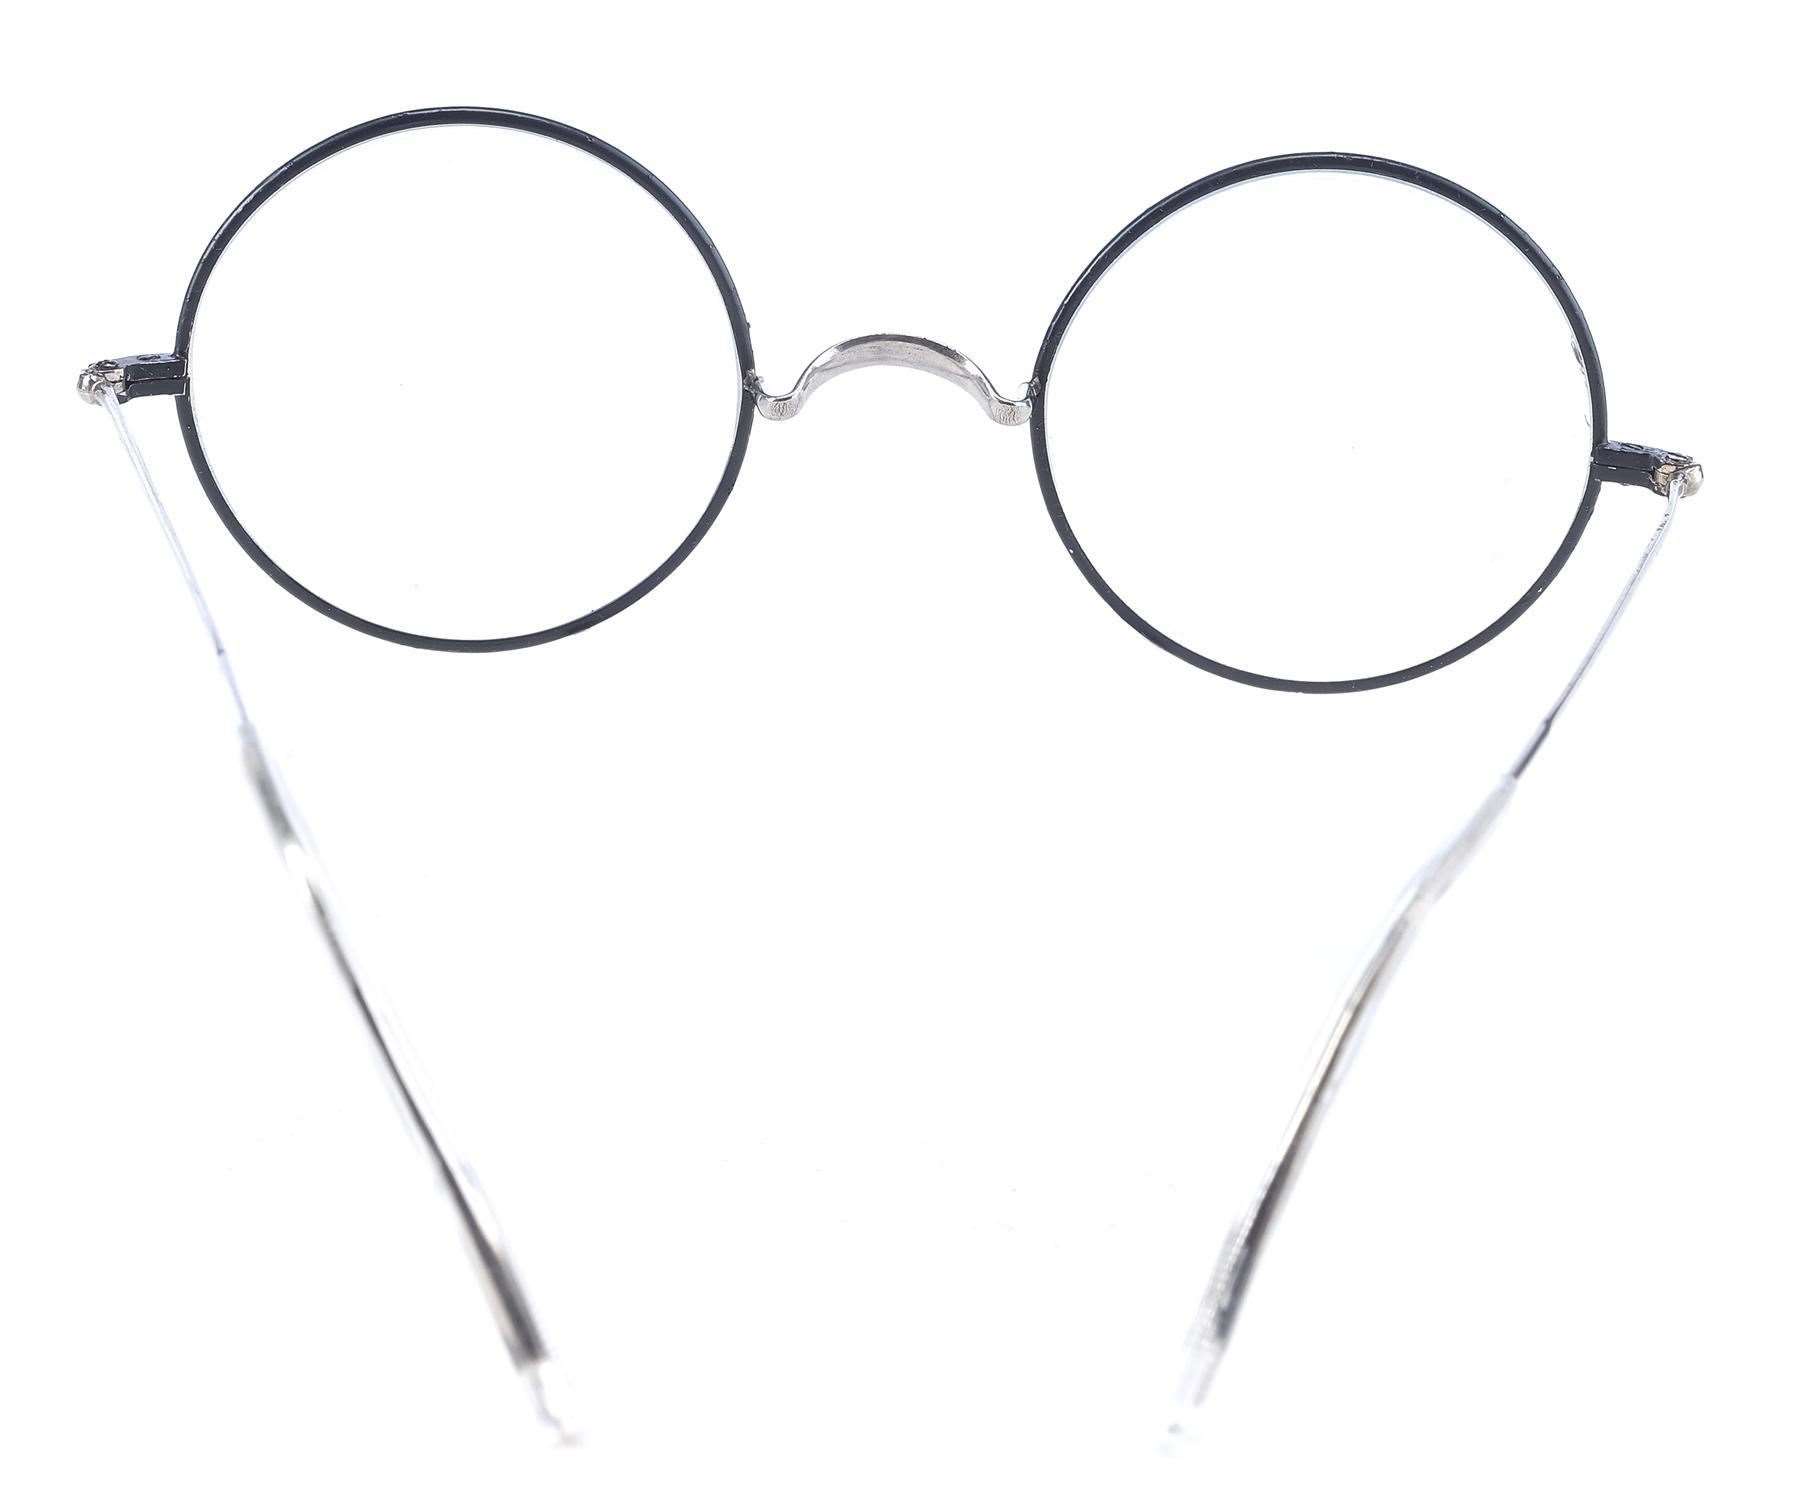 Harry Potter’s eyeglasses (Prop Store/PA)